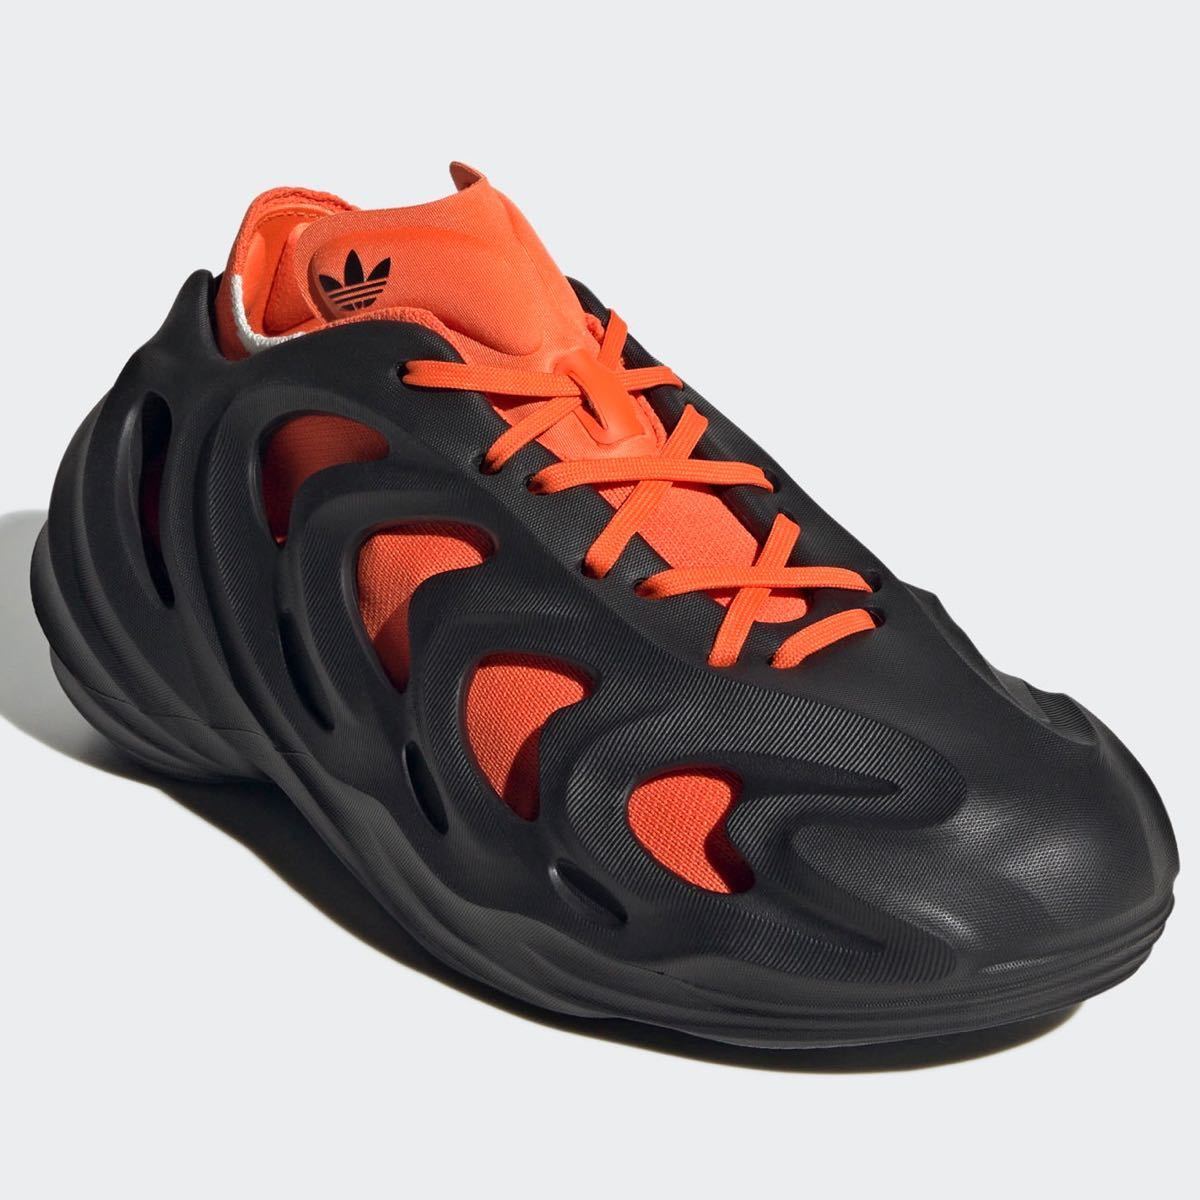  new goods unused Adidas adiFOM Q[26.5cm] sneakers Adi foam adidas shoes shoes foam Runner sandals 6581 black red 